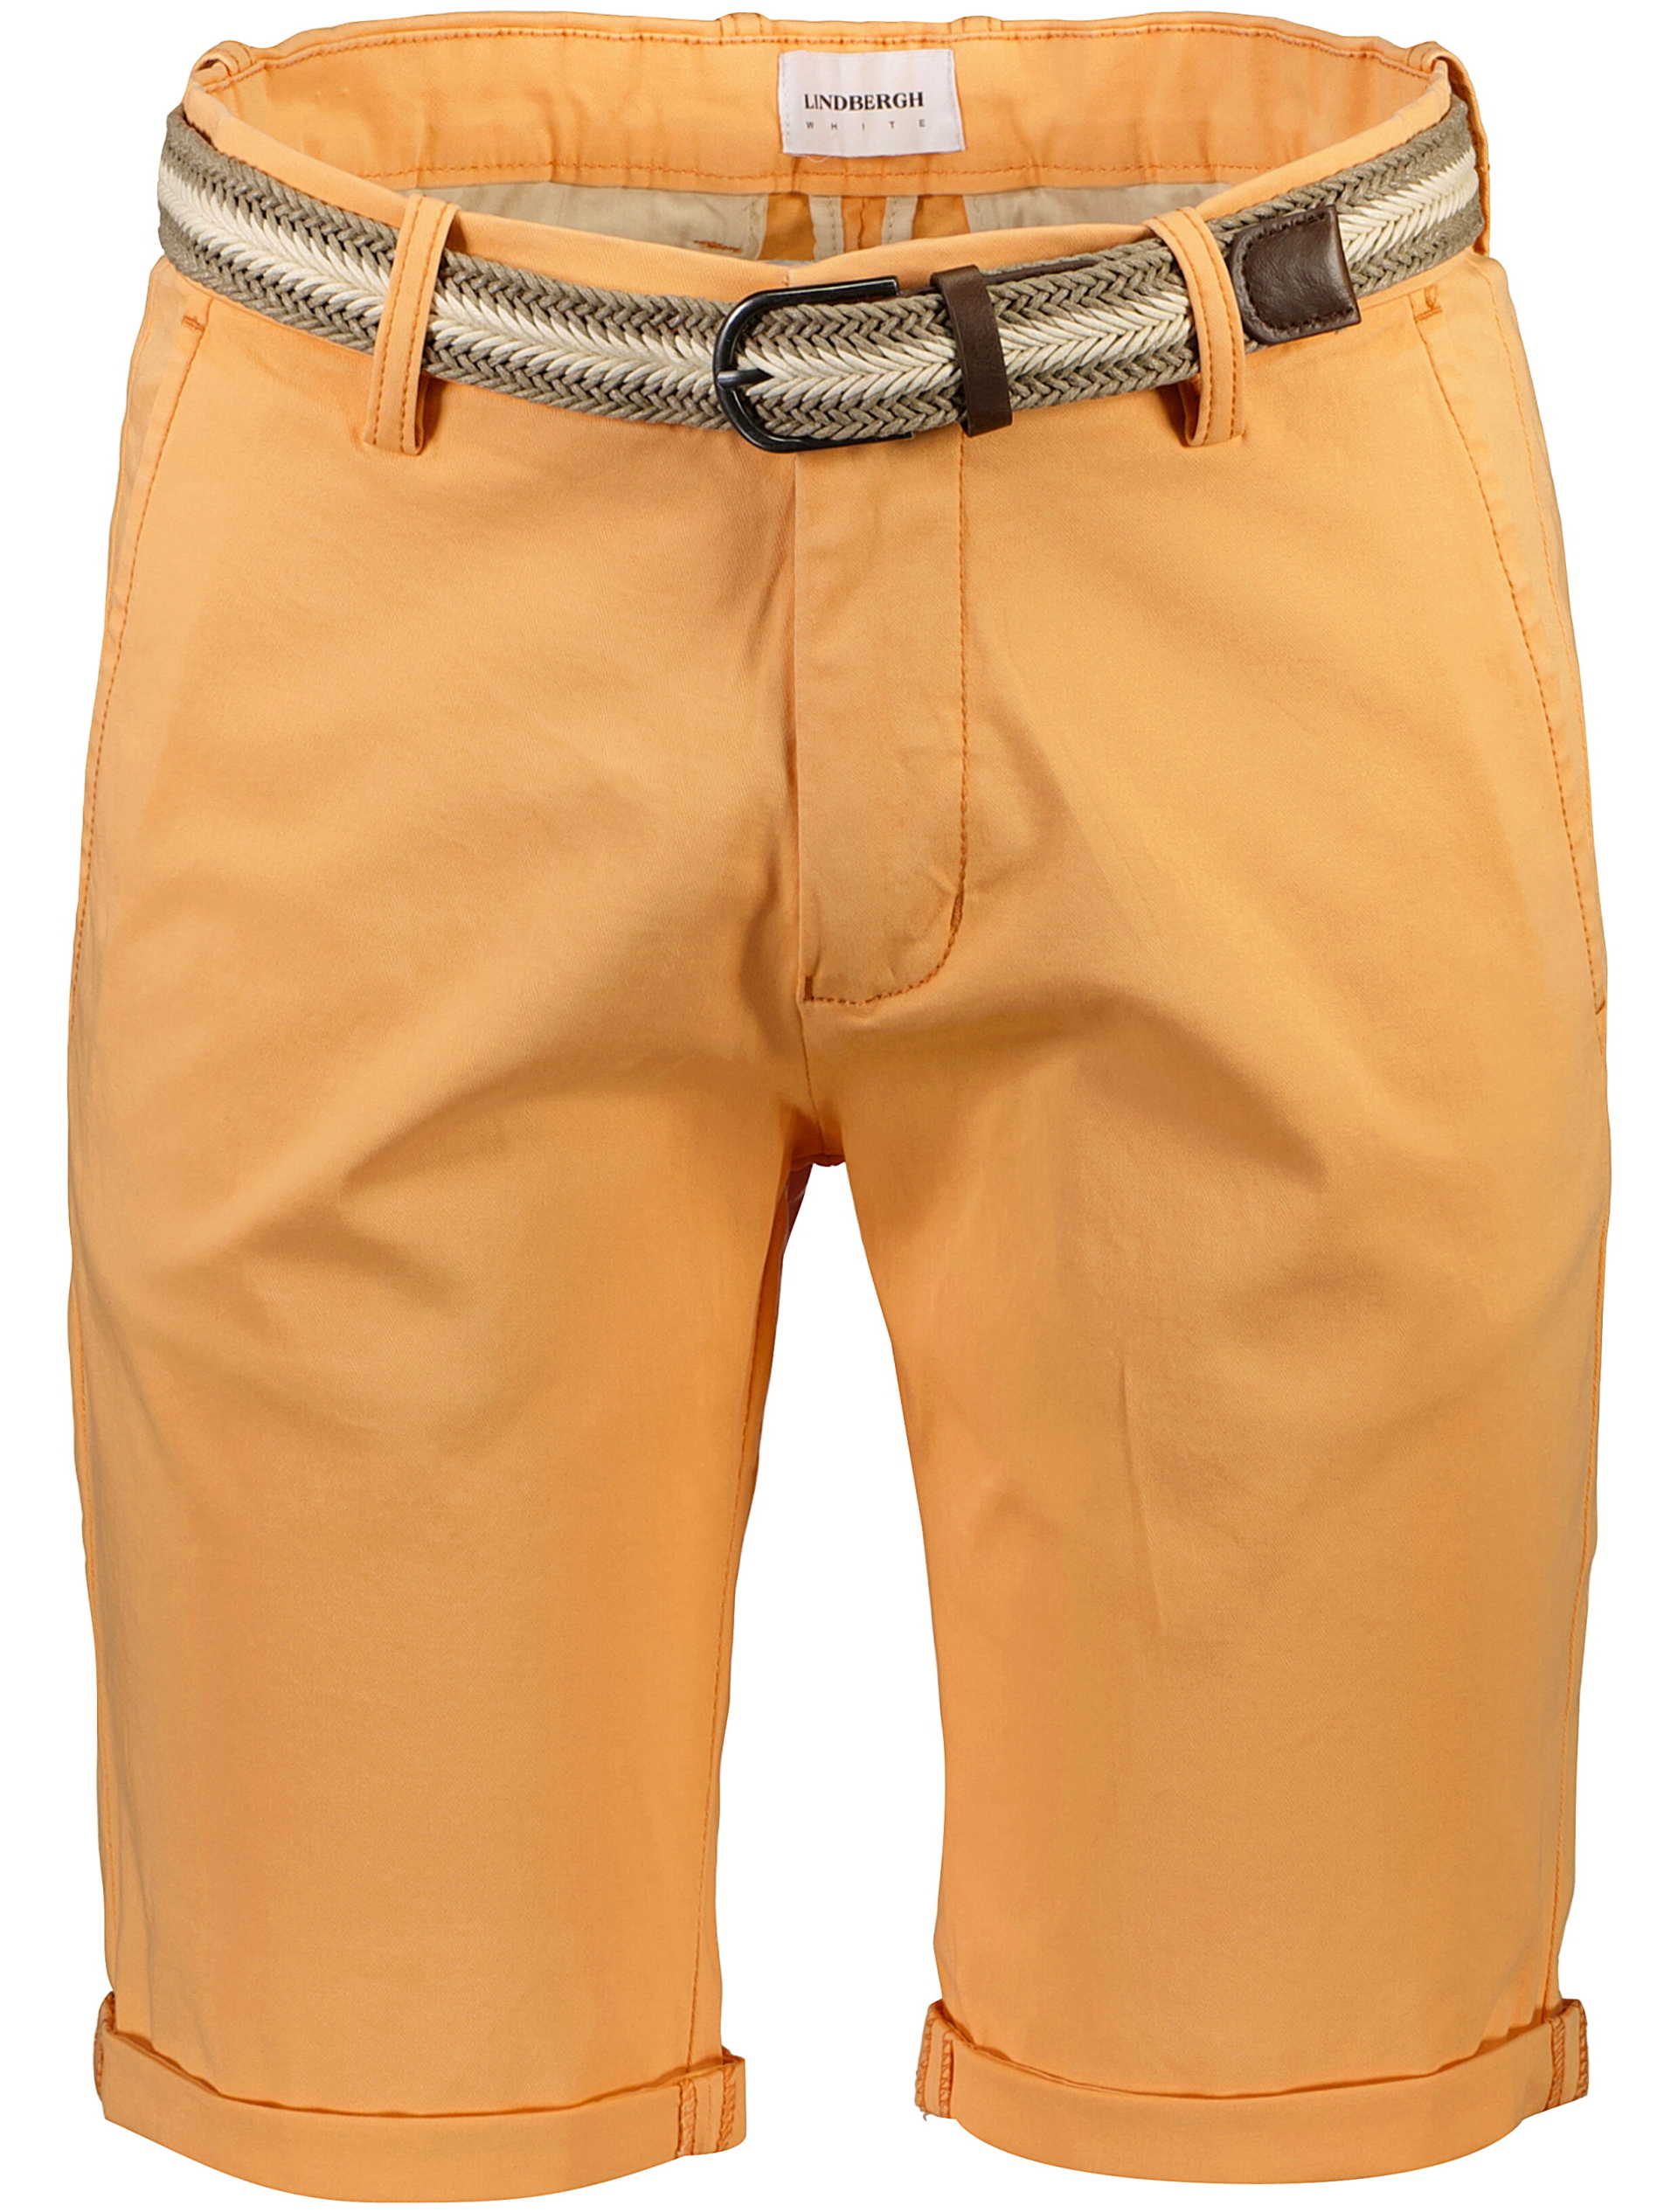 Lindbergh Chino shorts orange / pastel orange